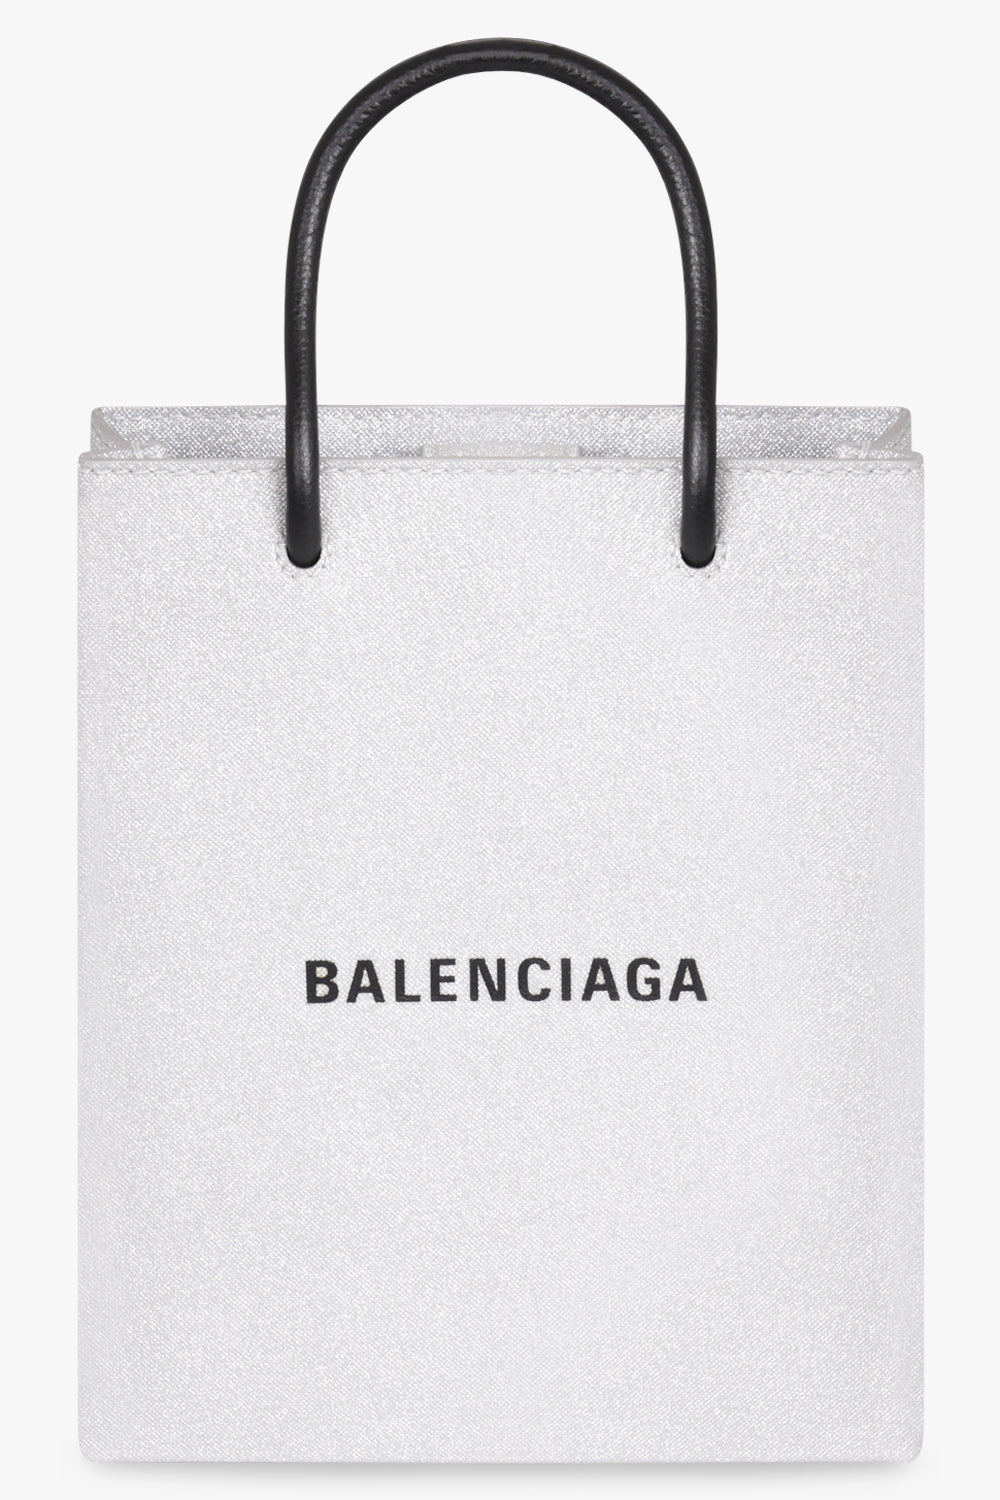 Complete Collection of Luxury Handbags | BALMAIN